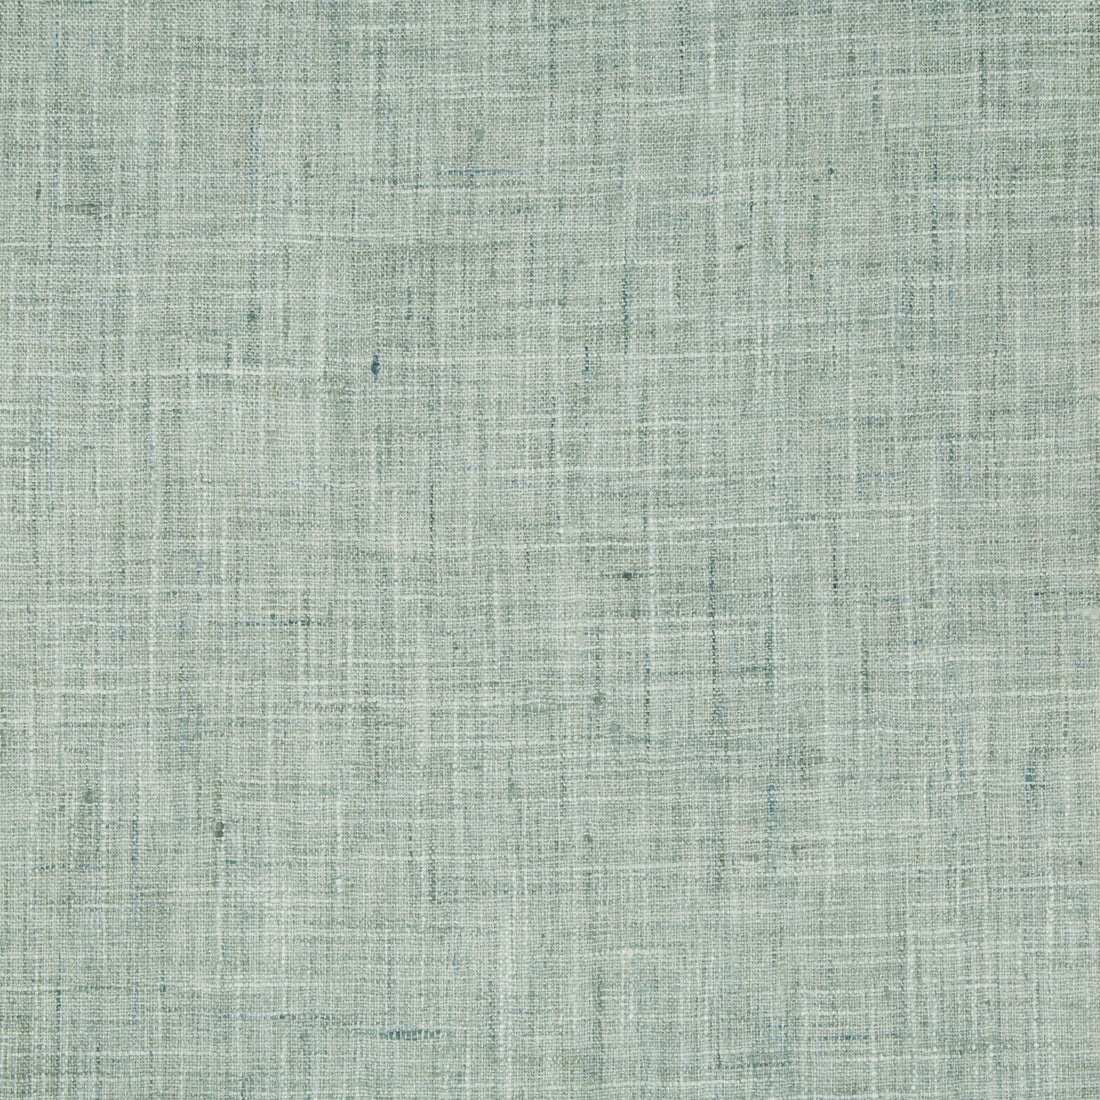 Kravet Smart fabric in 34983-23 color - pattern 34983.23.0 - by Kravet Smart